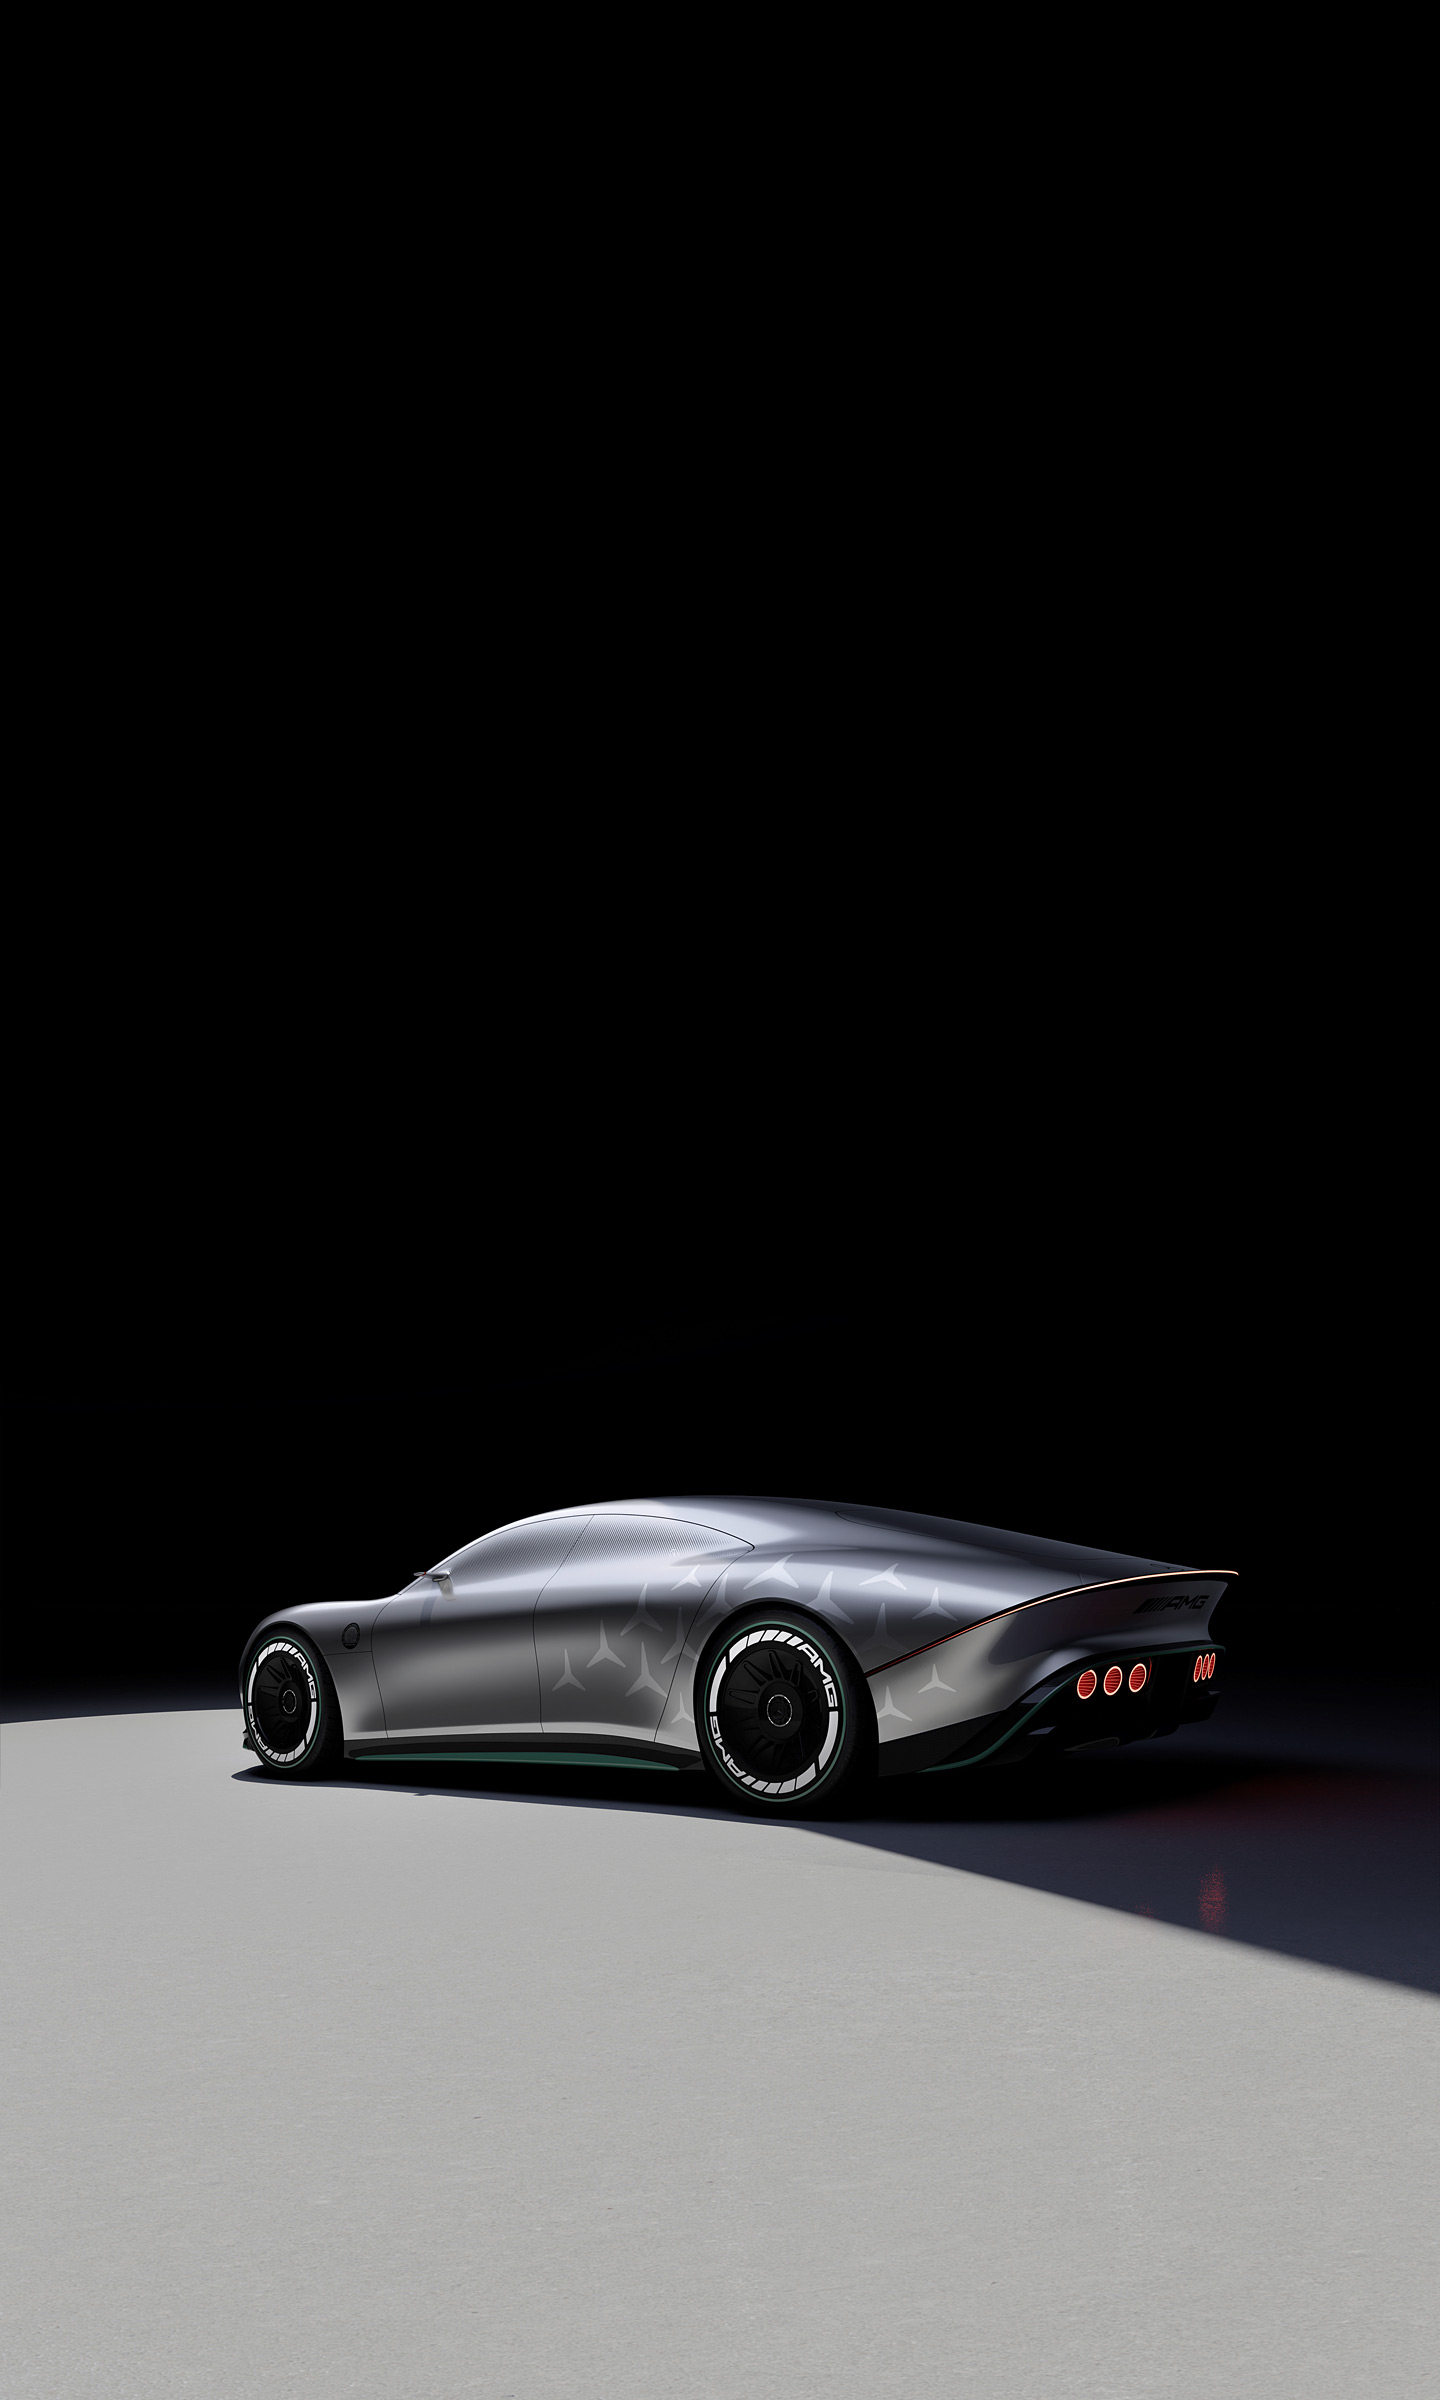  2022 Mercedes-Benz Vision AMG Concept Wallpaper.